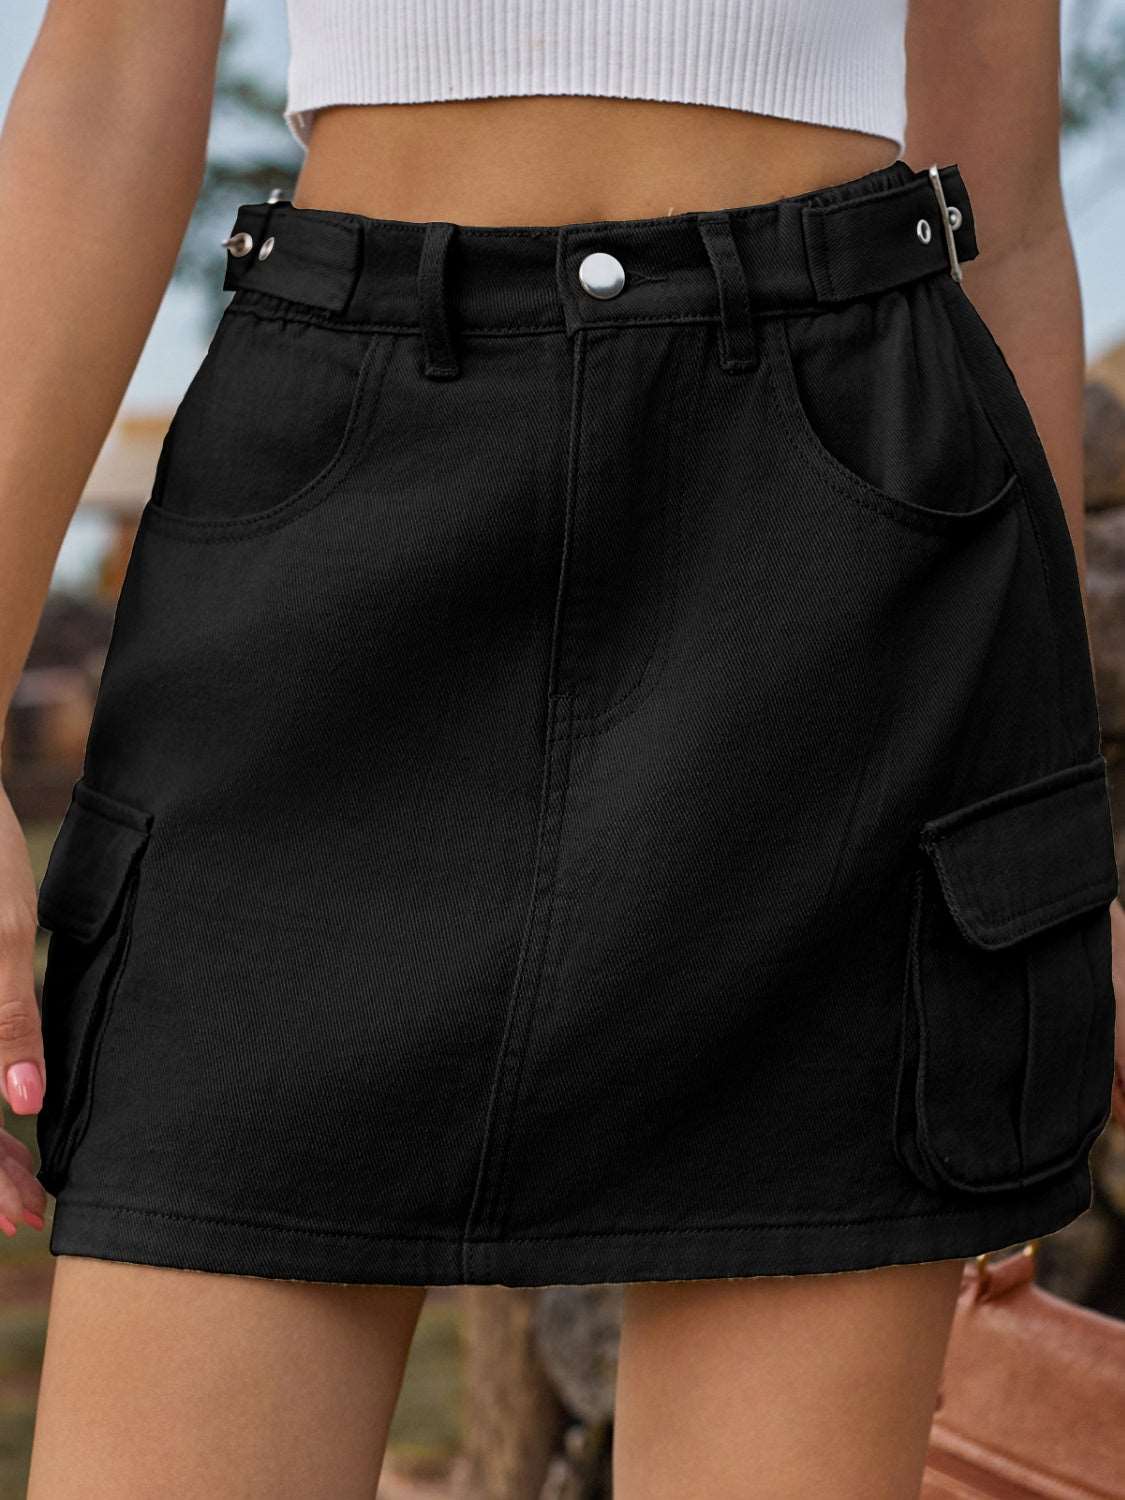 Adjustable Waist Denim Skirt with Pockets Black Skirt